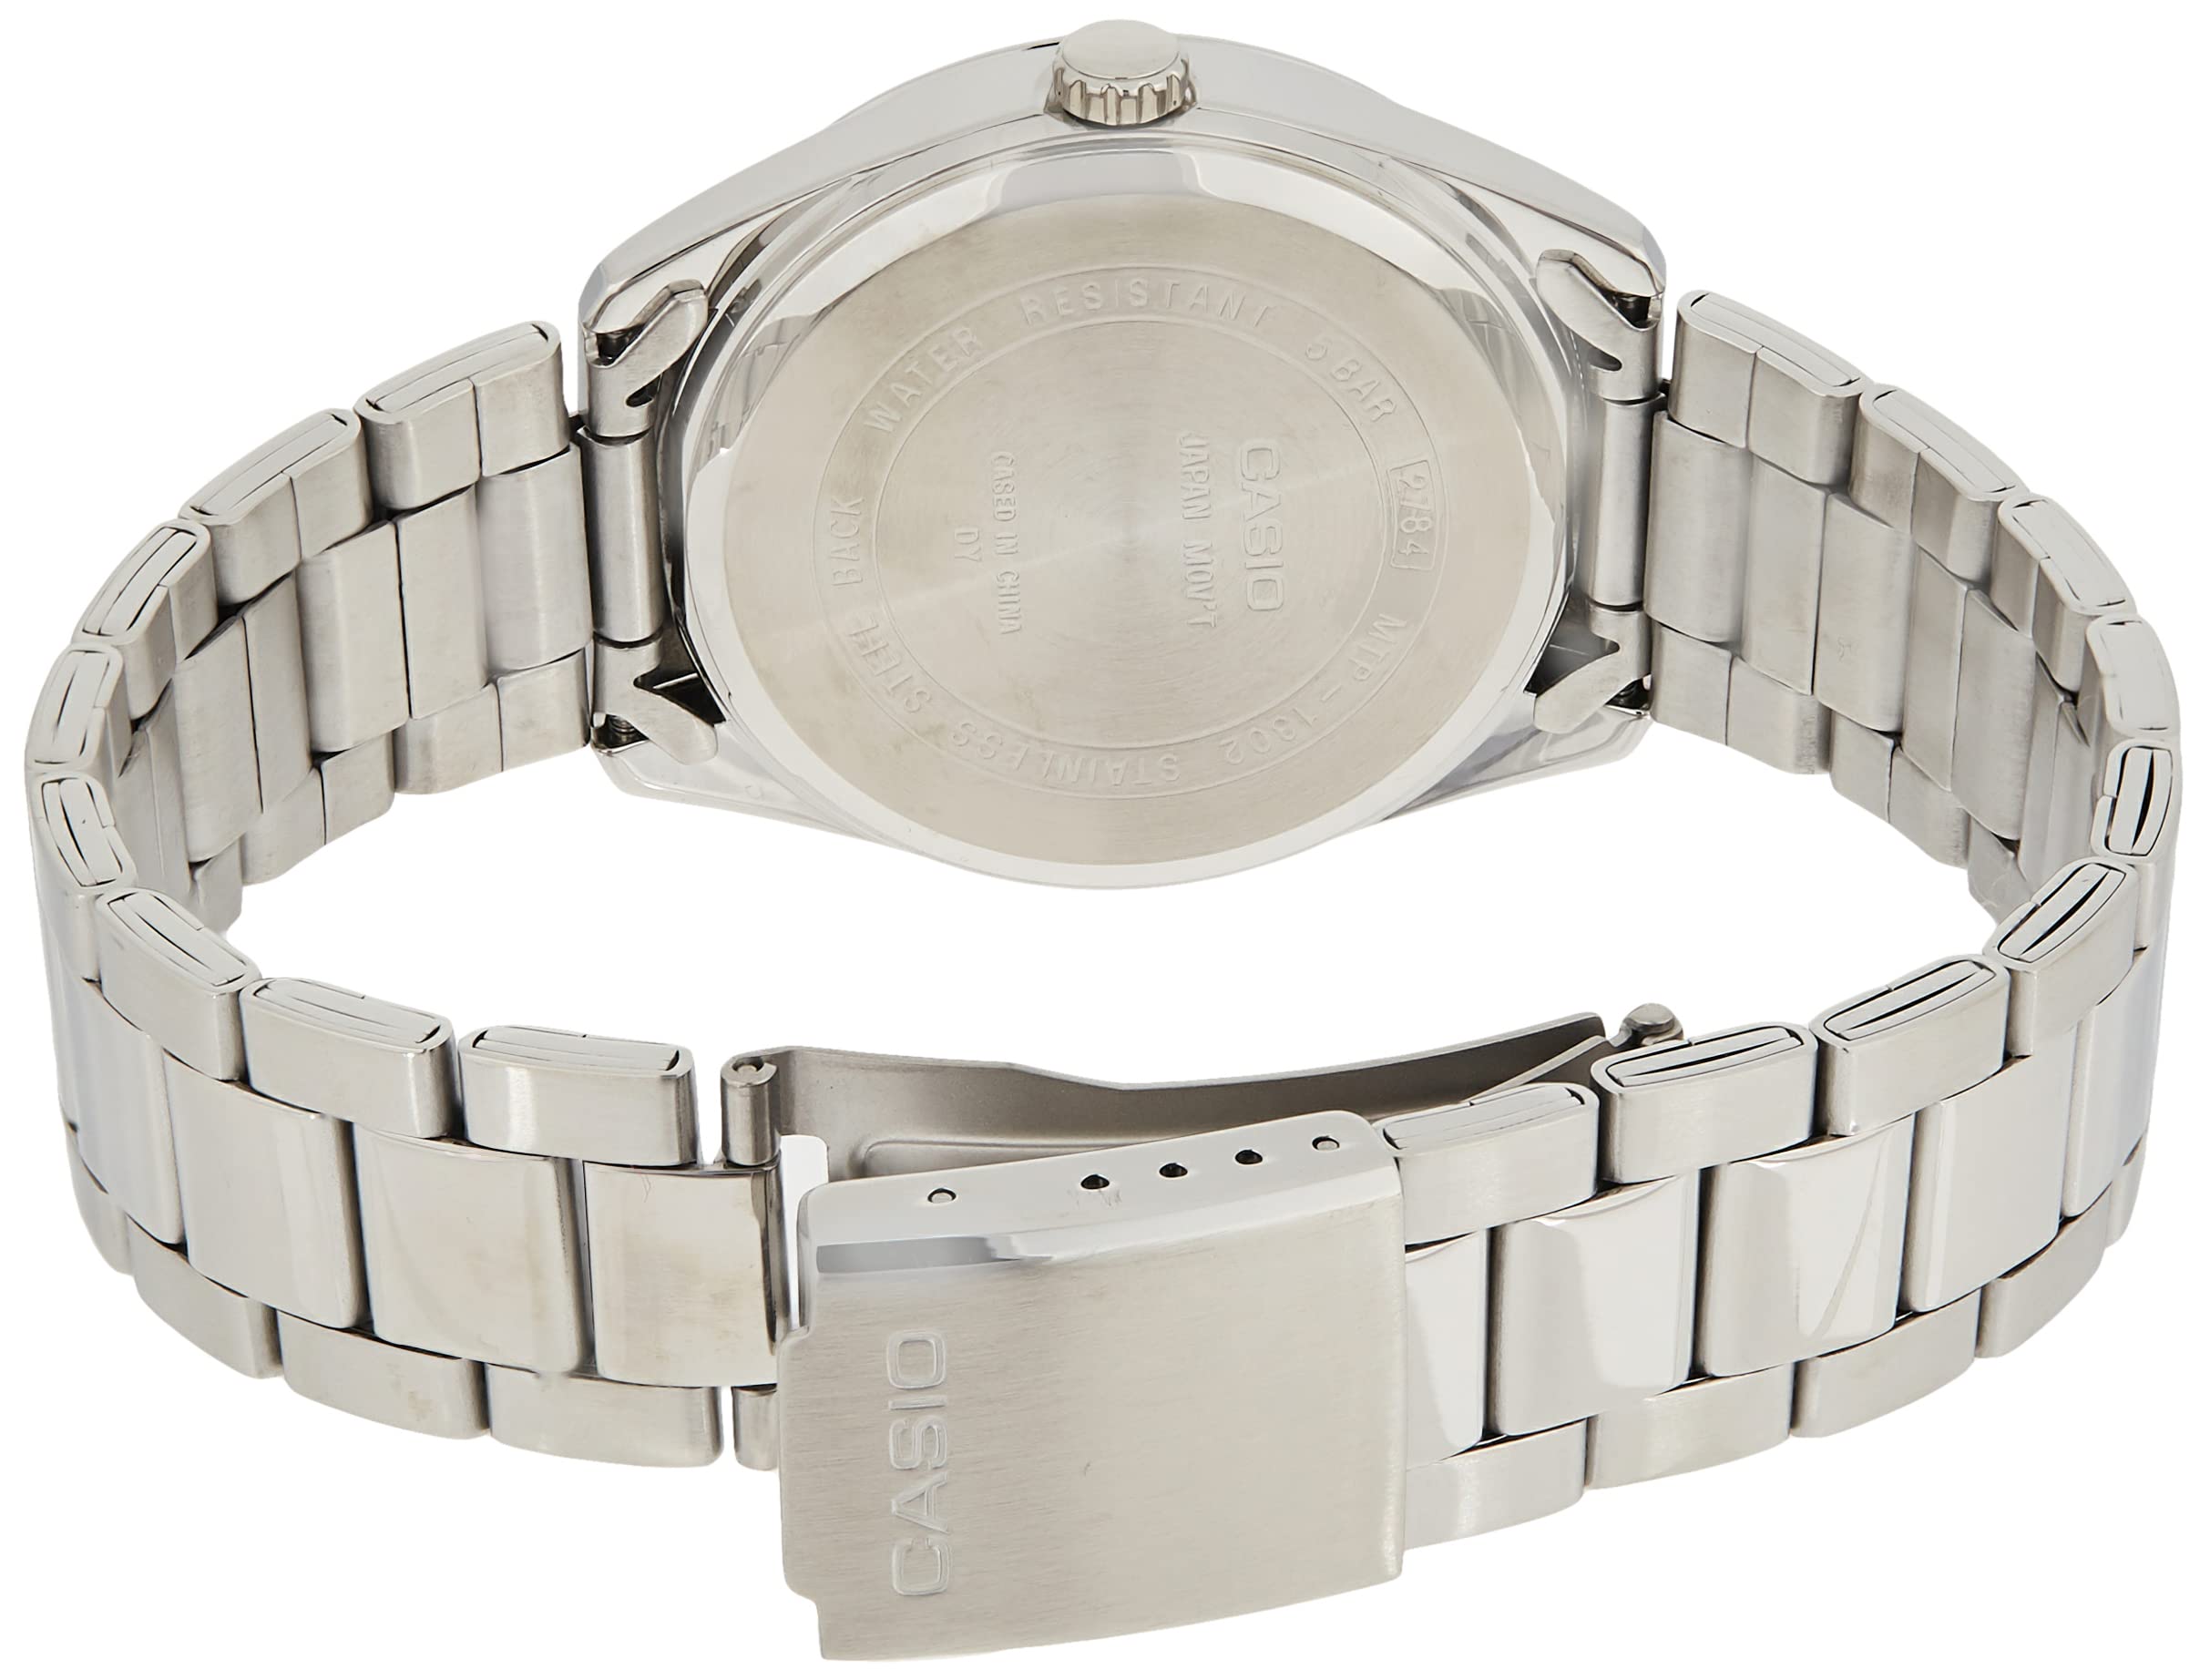 Casio General Men's Watches Standard Analog MTP-1302D-7A2VDF - WW